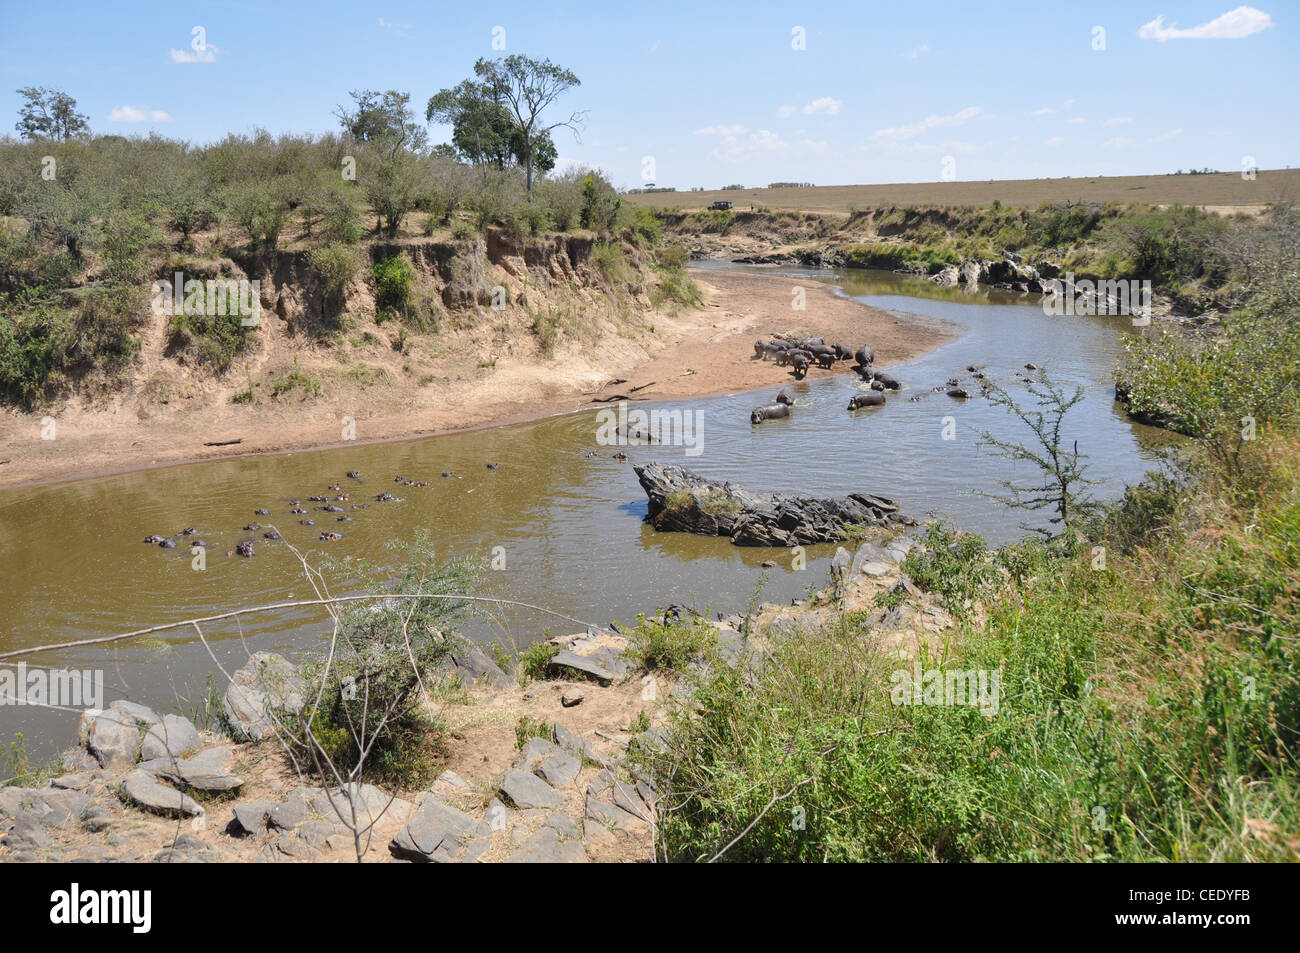 Hippopotamus in the Mara river Stock Photo